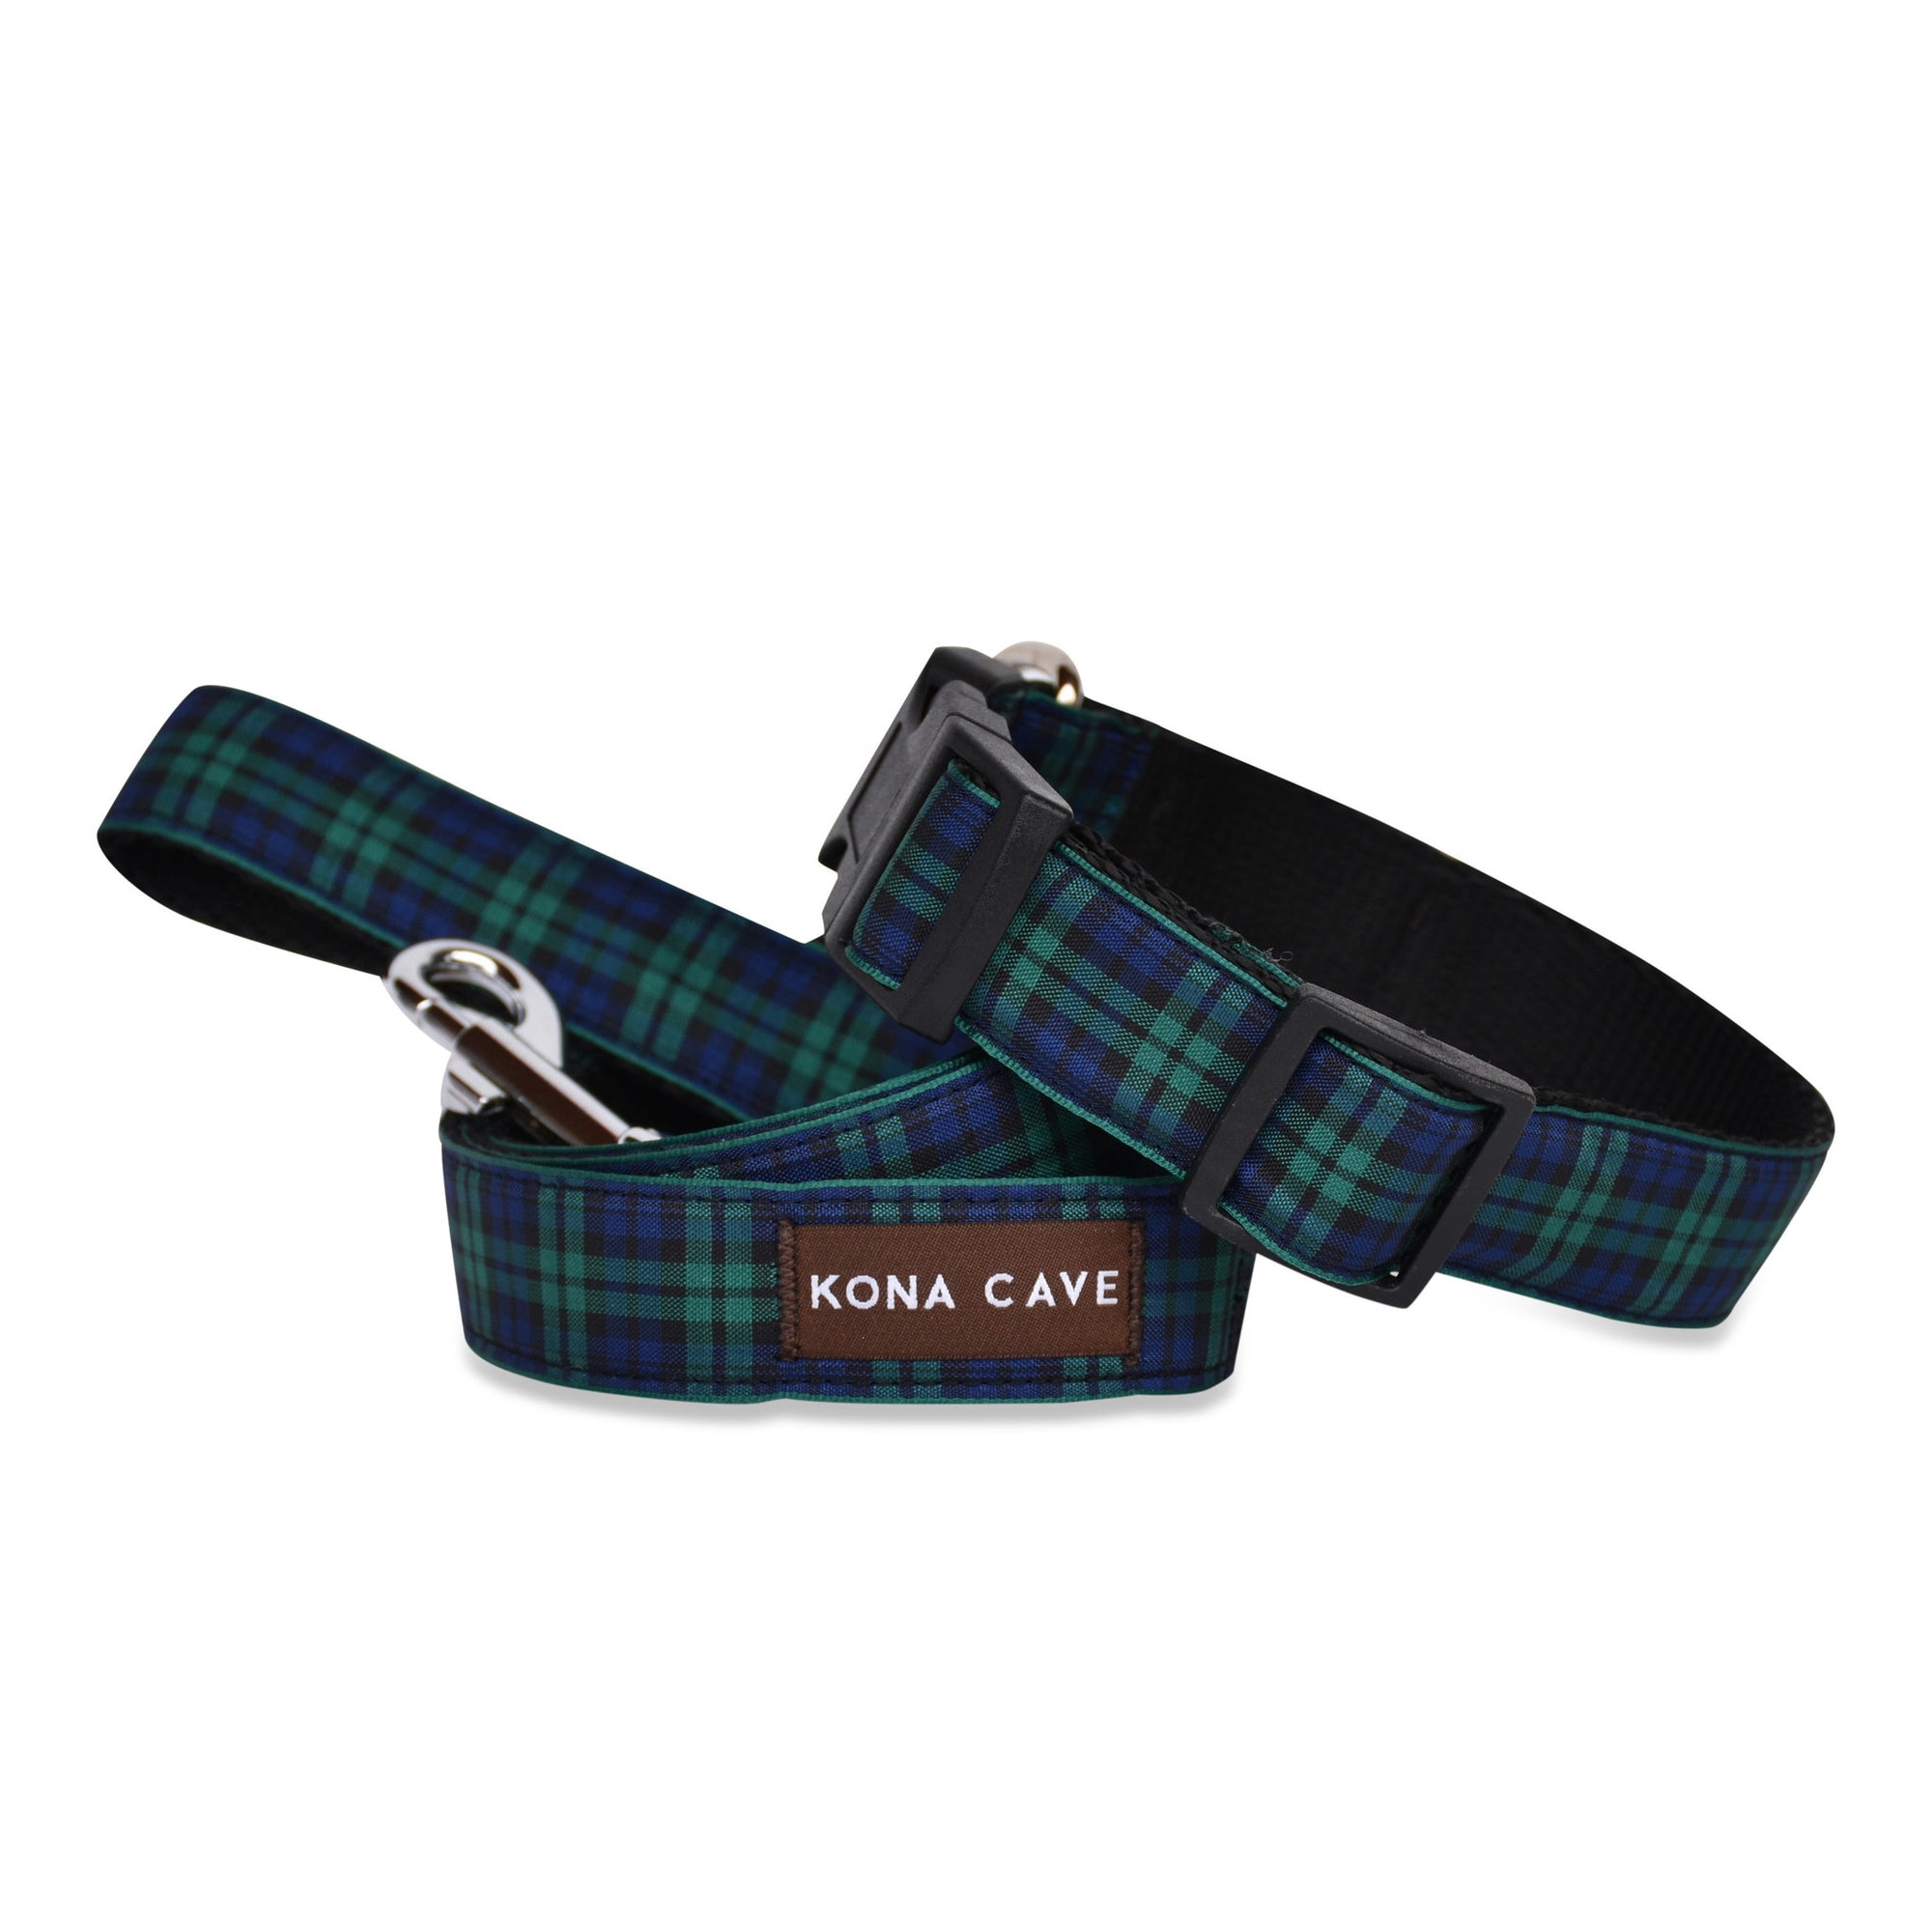 KONA CAVE ® - dog leash / lead and collar in authentic Blackwatch tartan (blue/green)